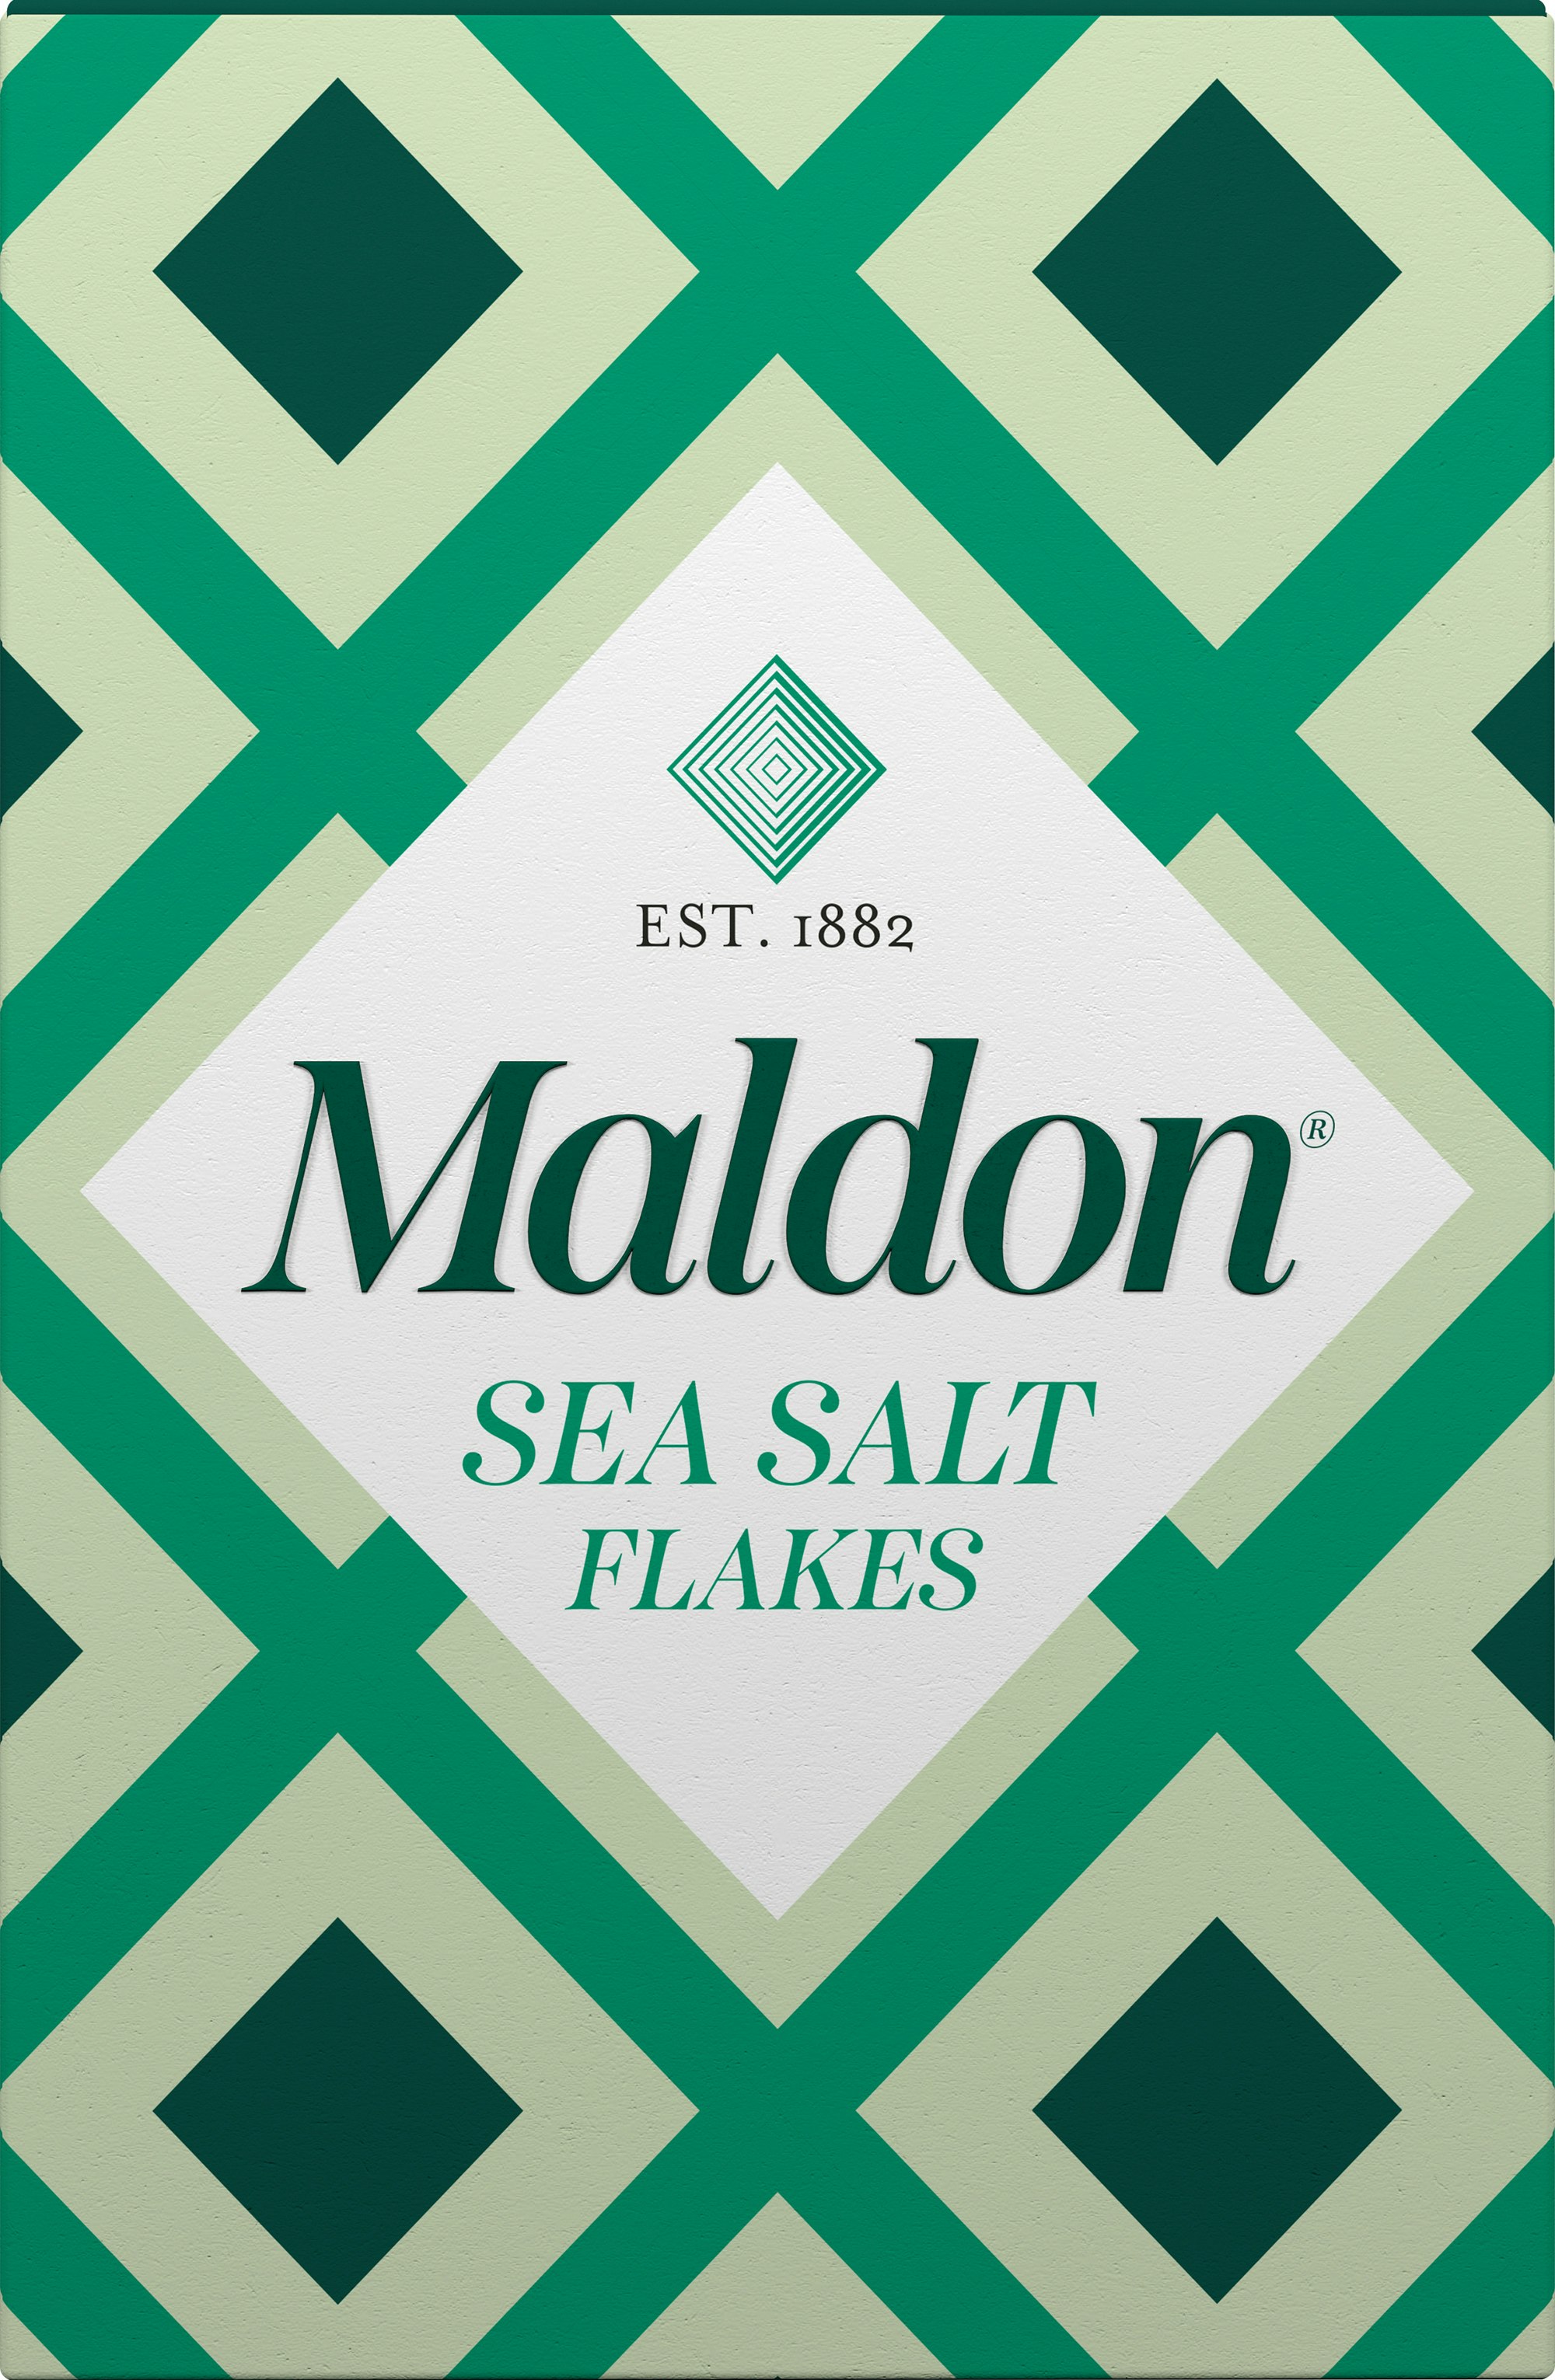 Maldon salt